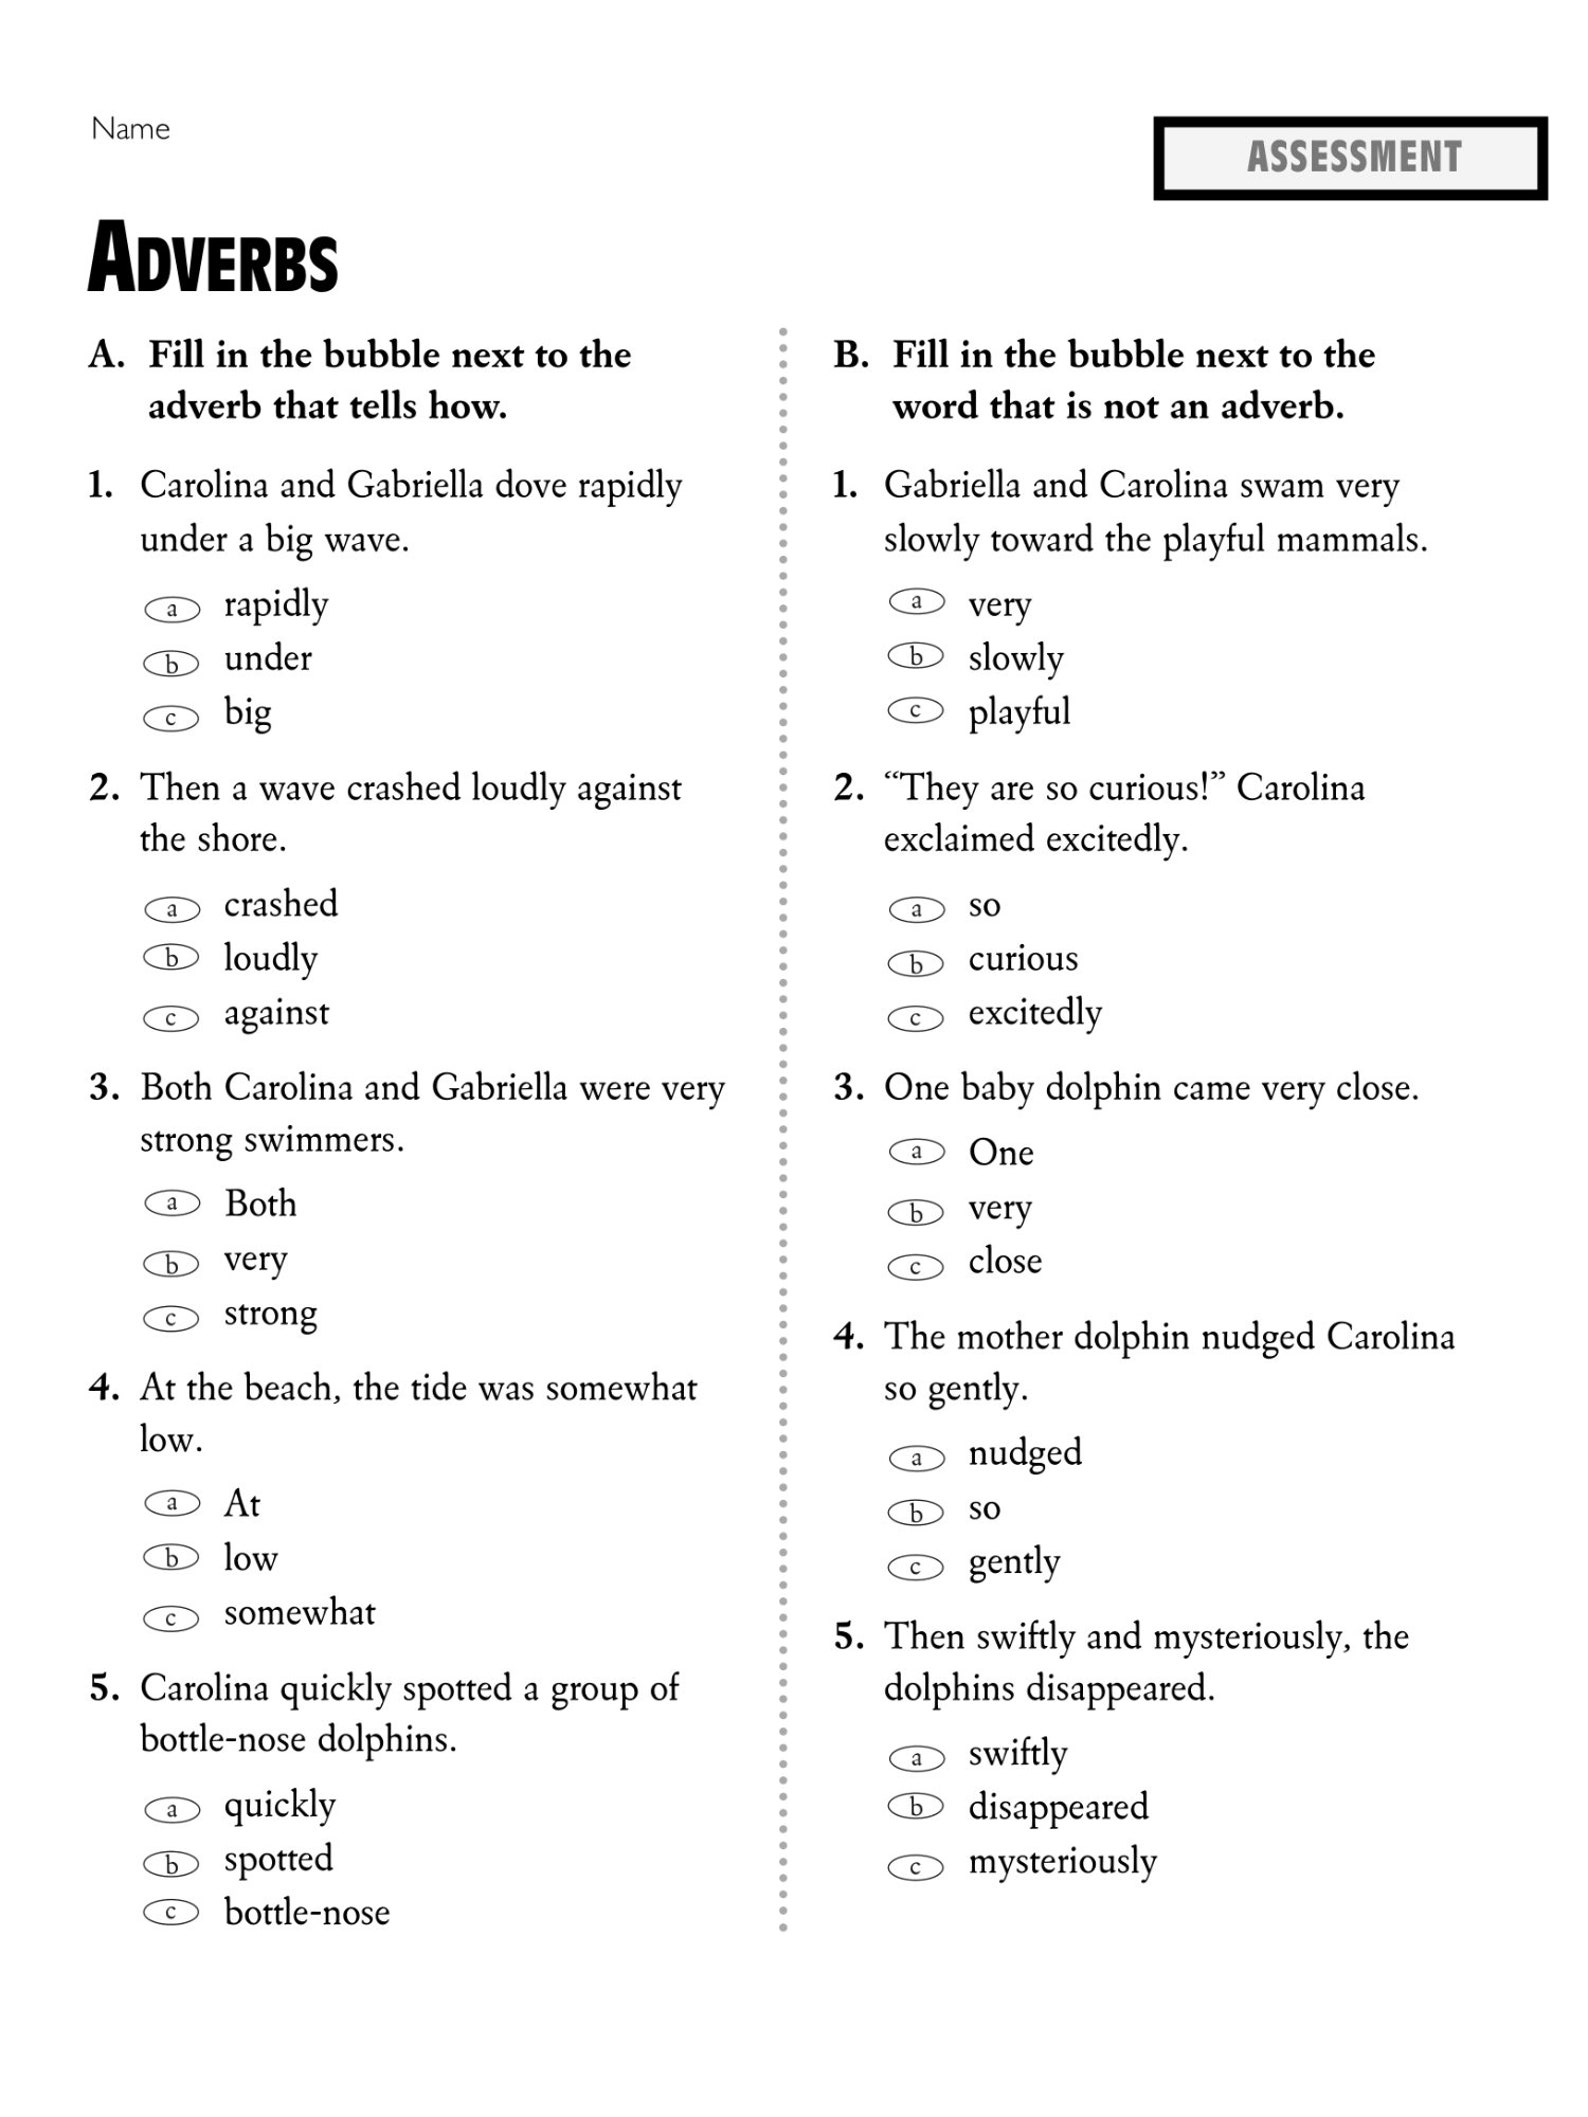 adverbs-6th-grade-english-worksheets-5th-grade-grammar-etsy